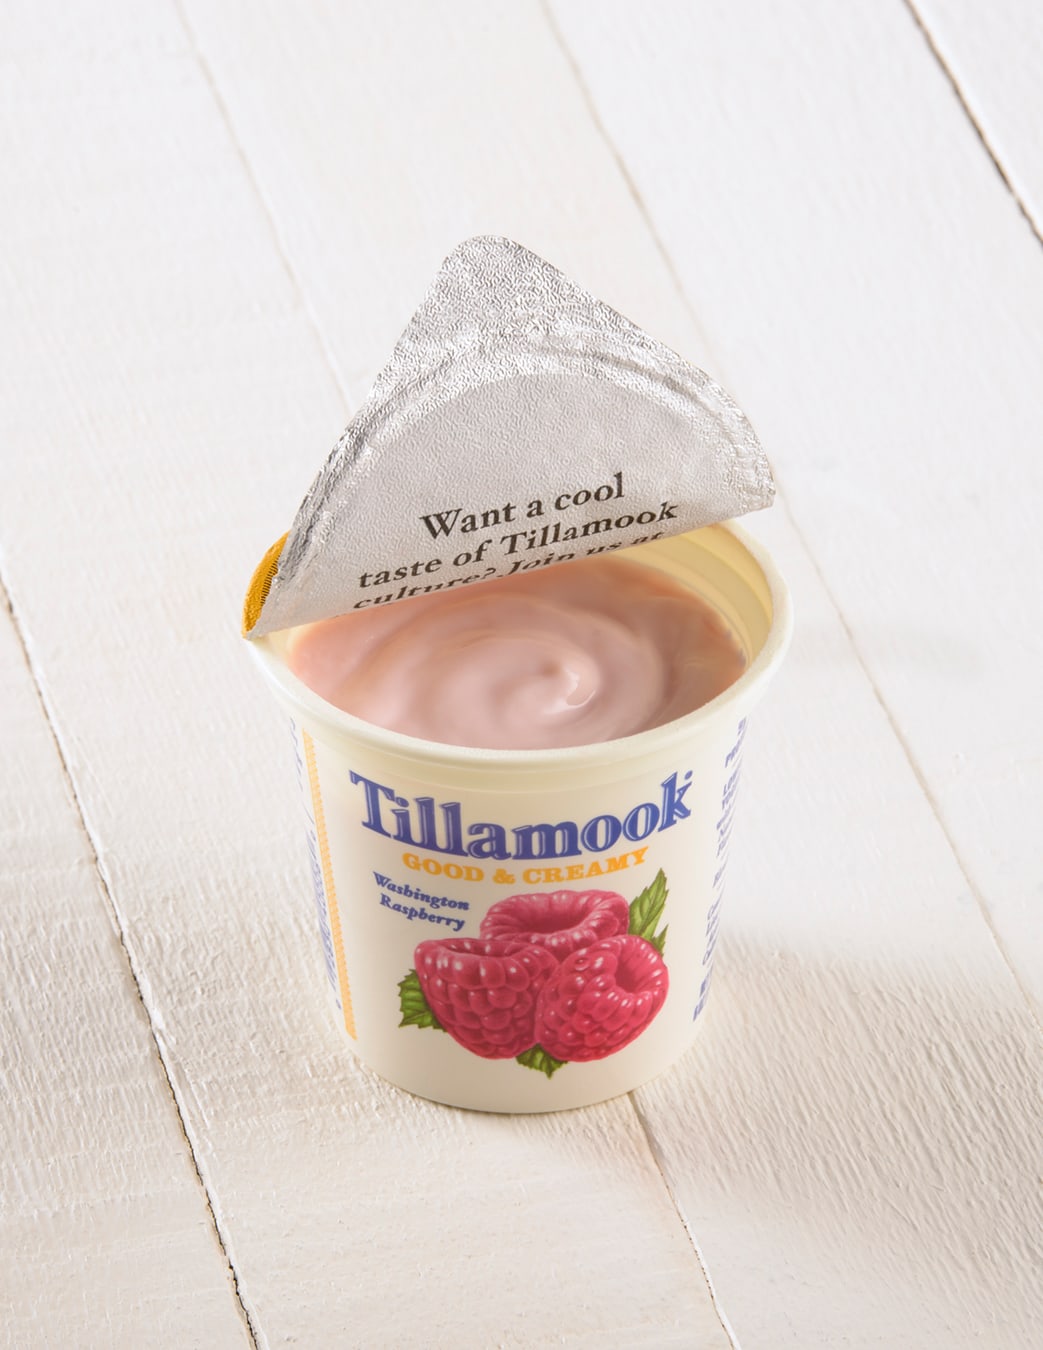 Tillamook yogurt package design inside